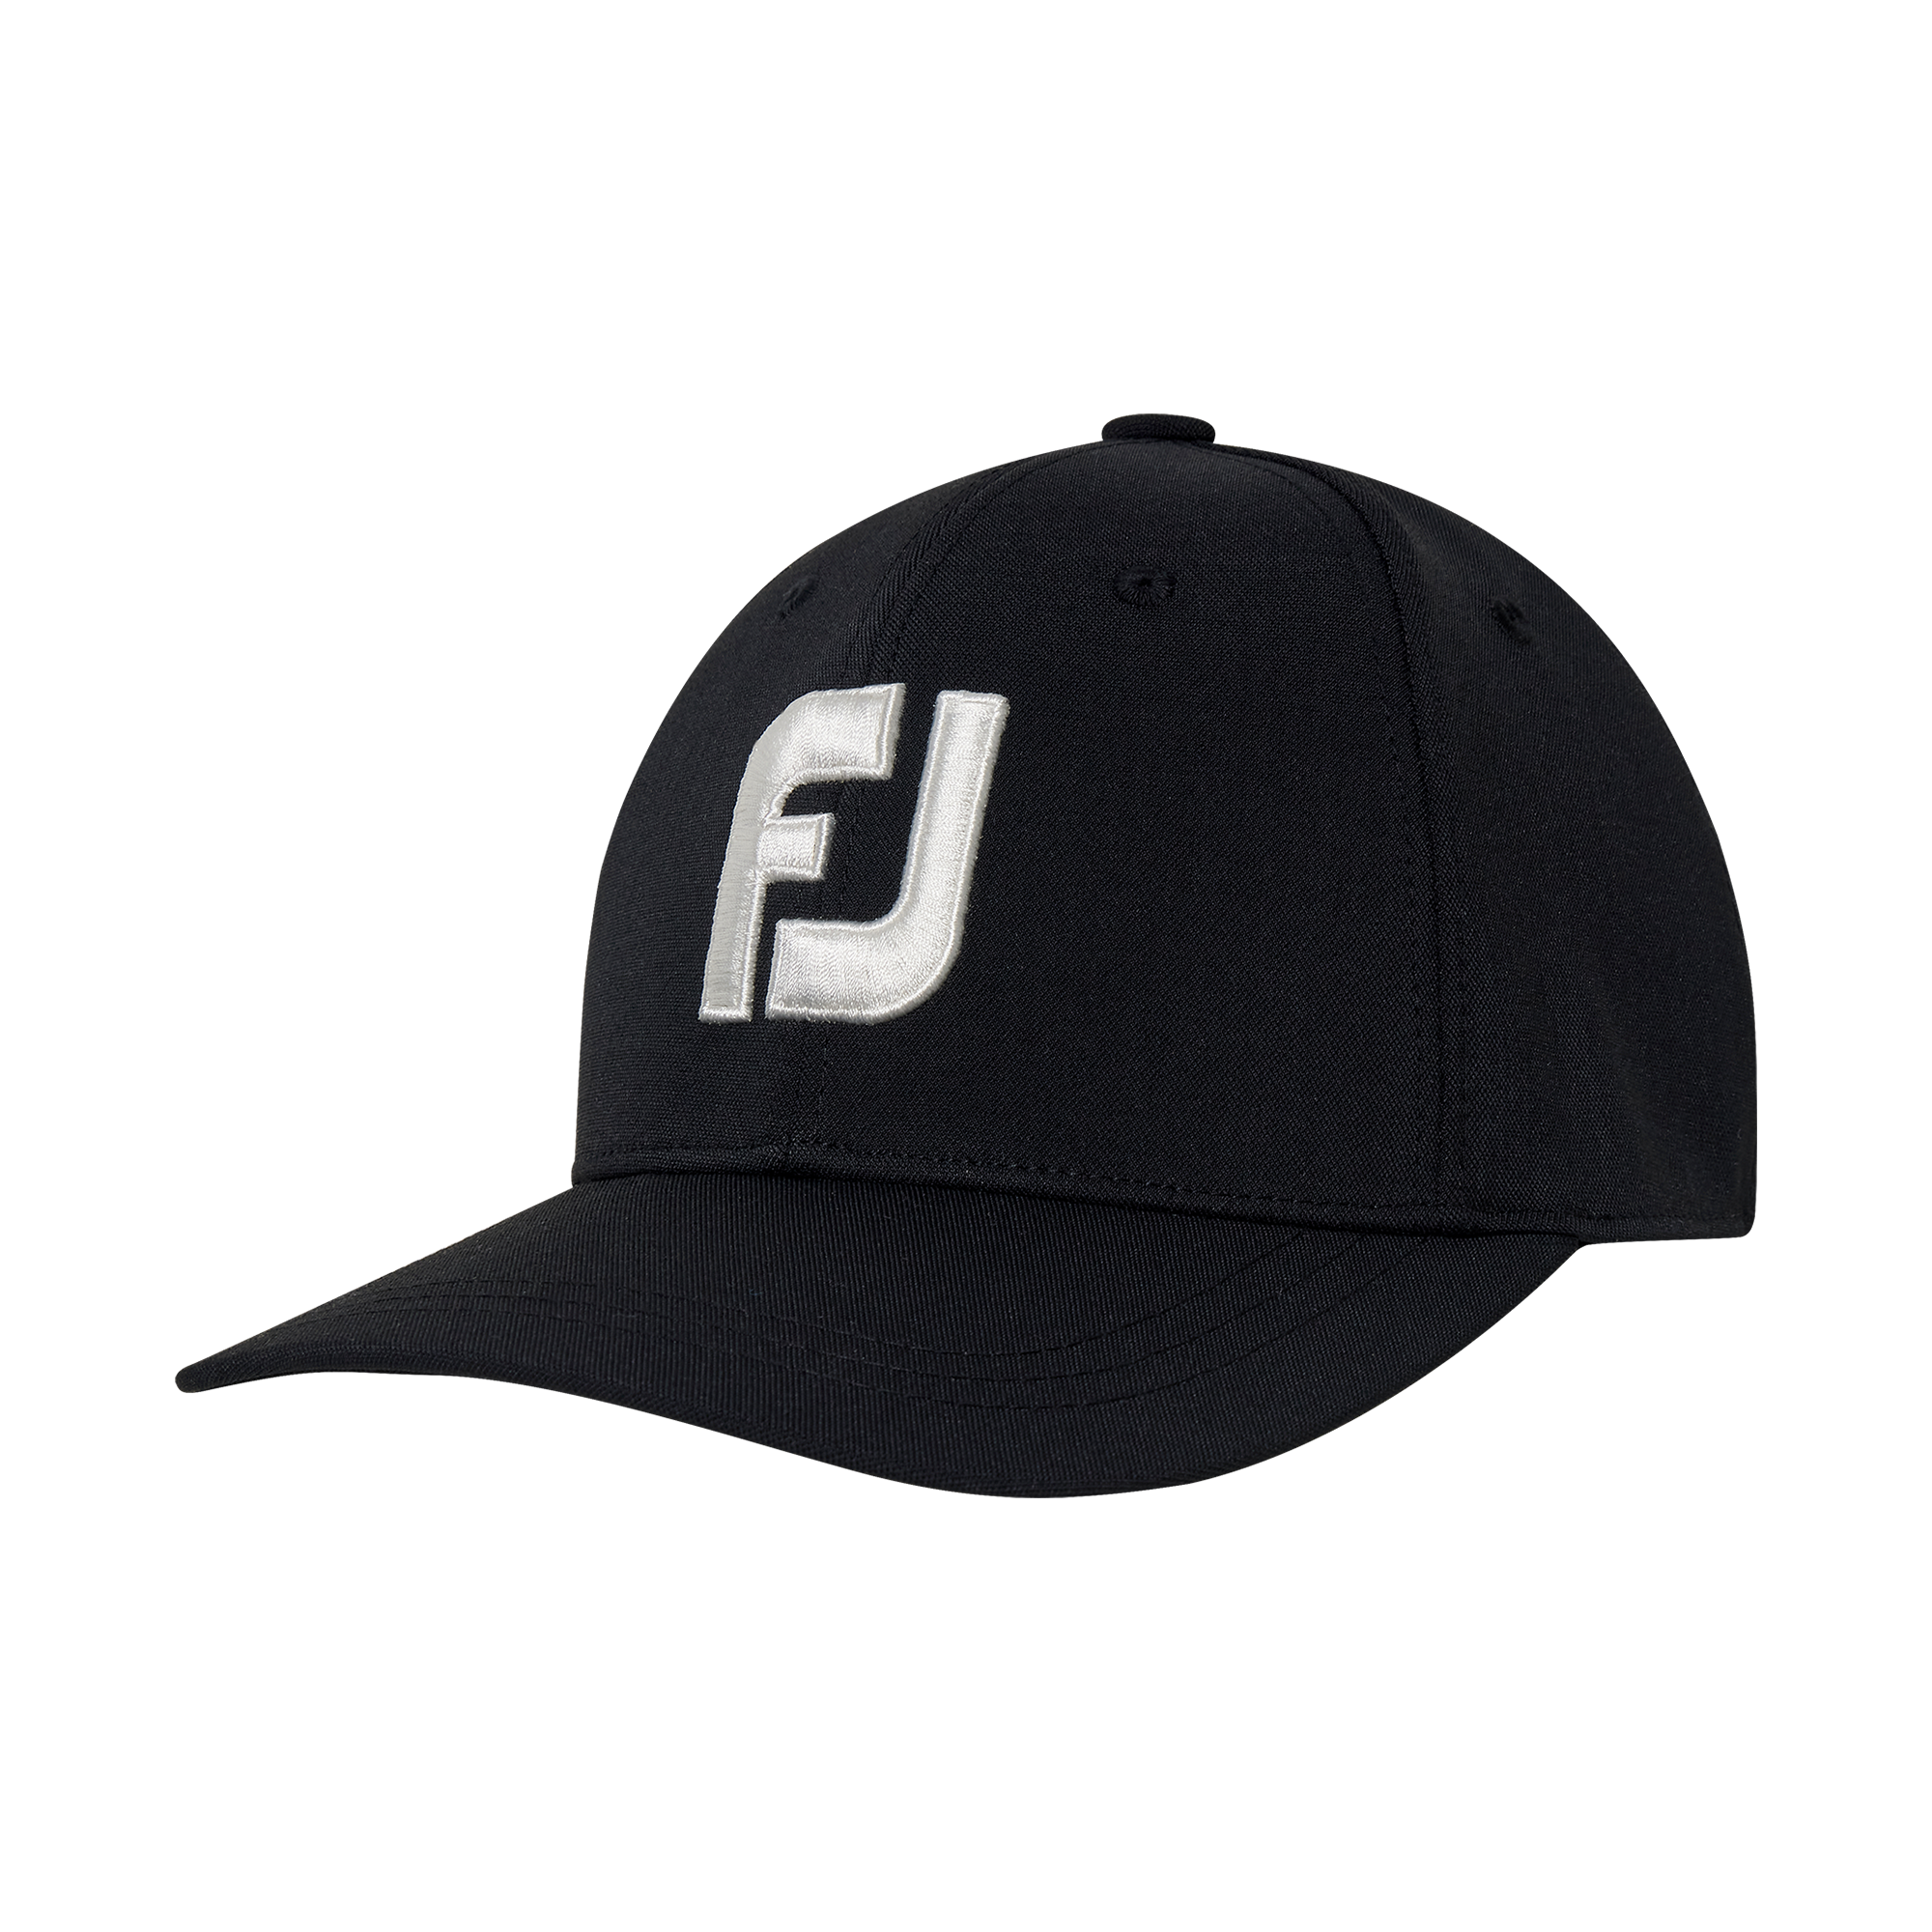 FJ Signature Cap